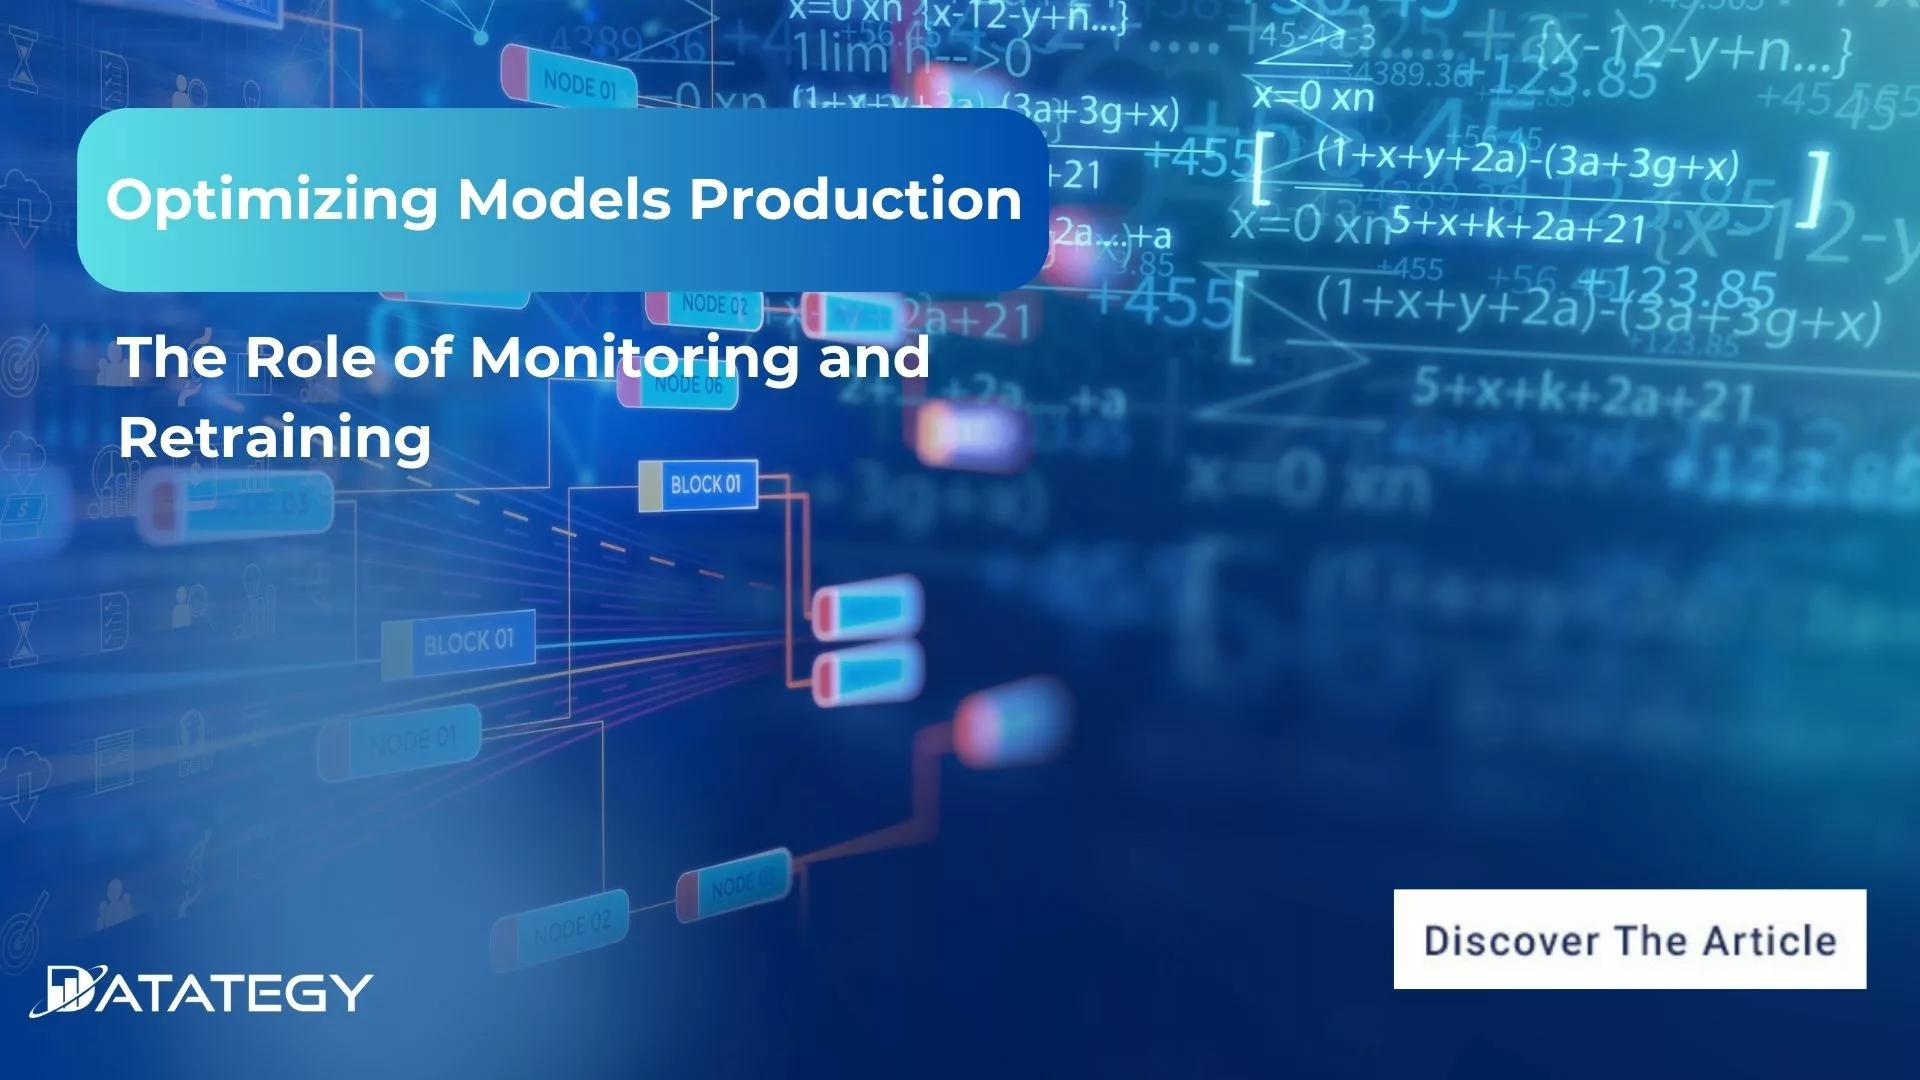 Optimizing Models Production: Monitoring and Retraining Roles